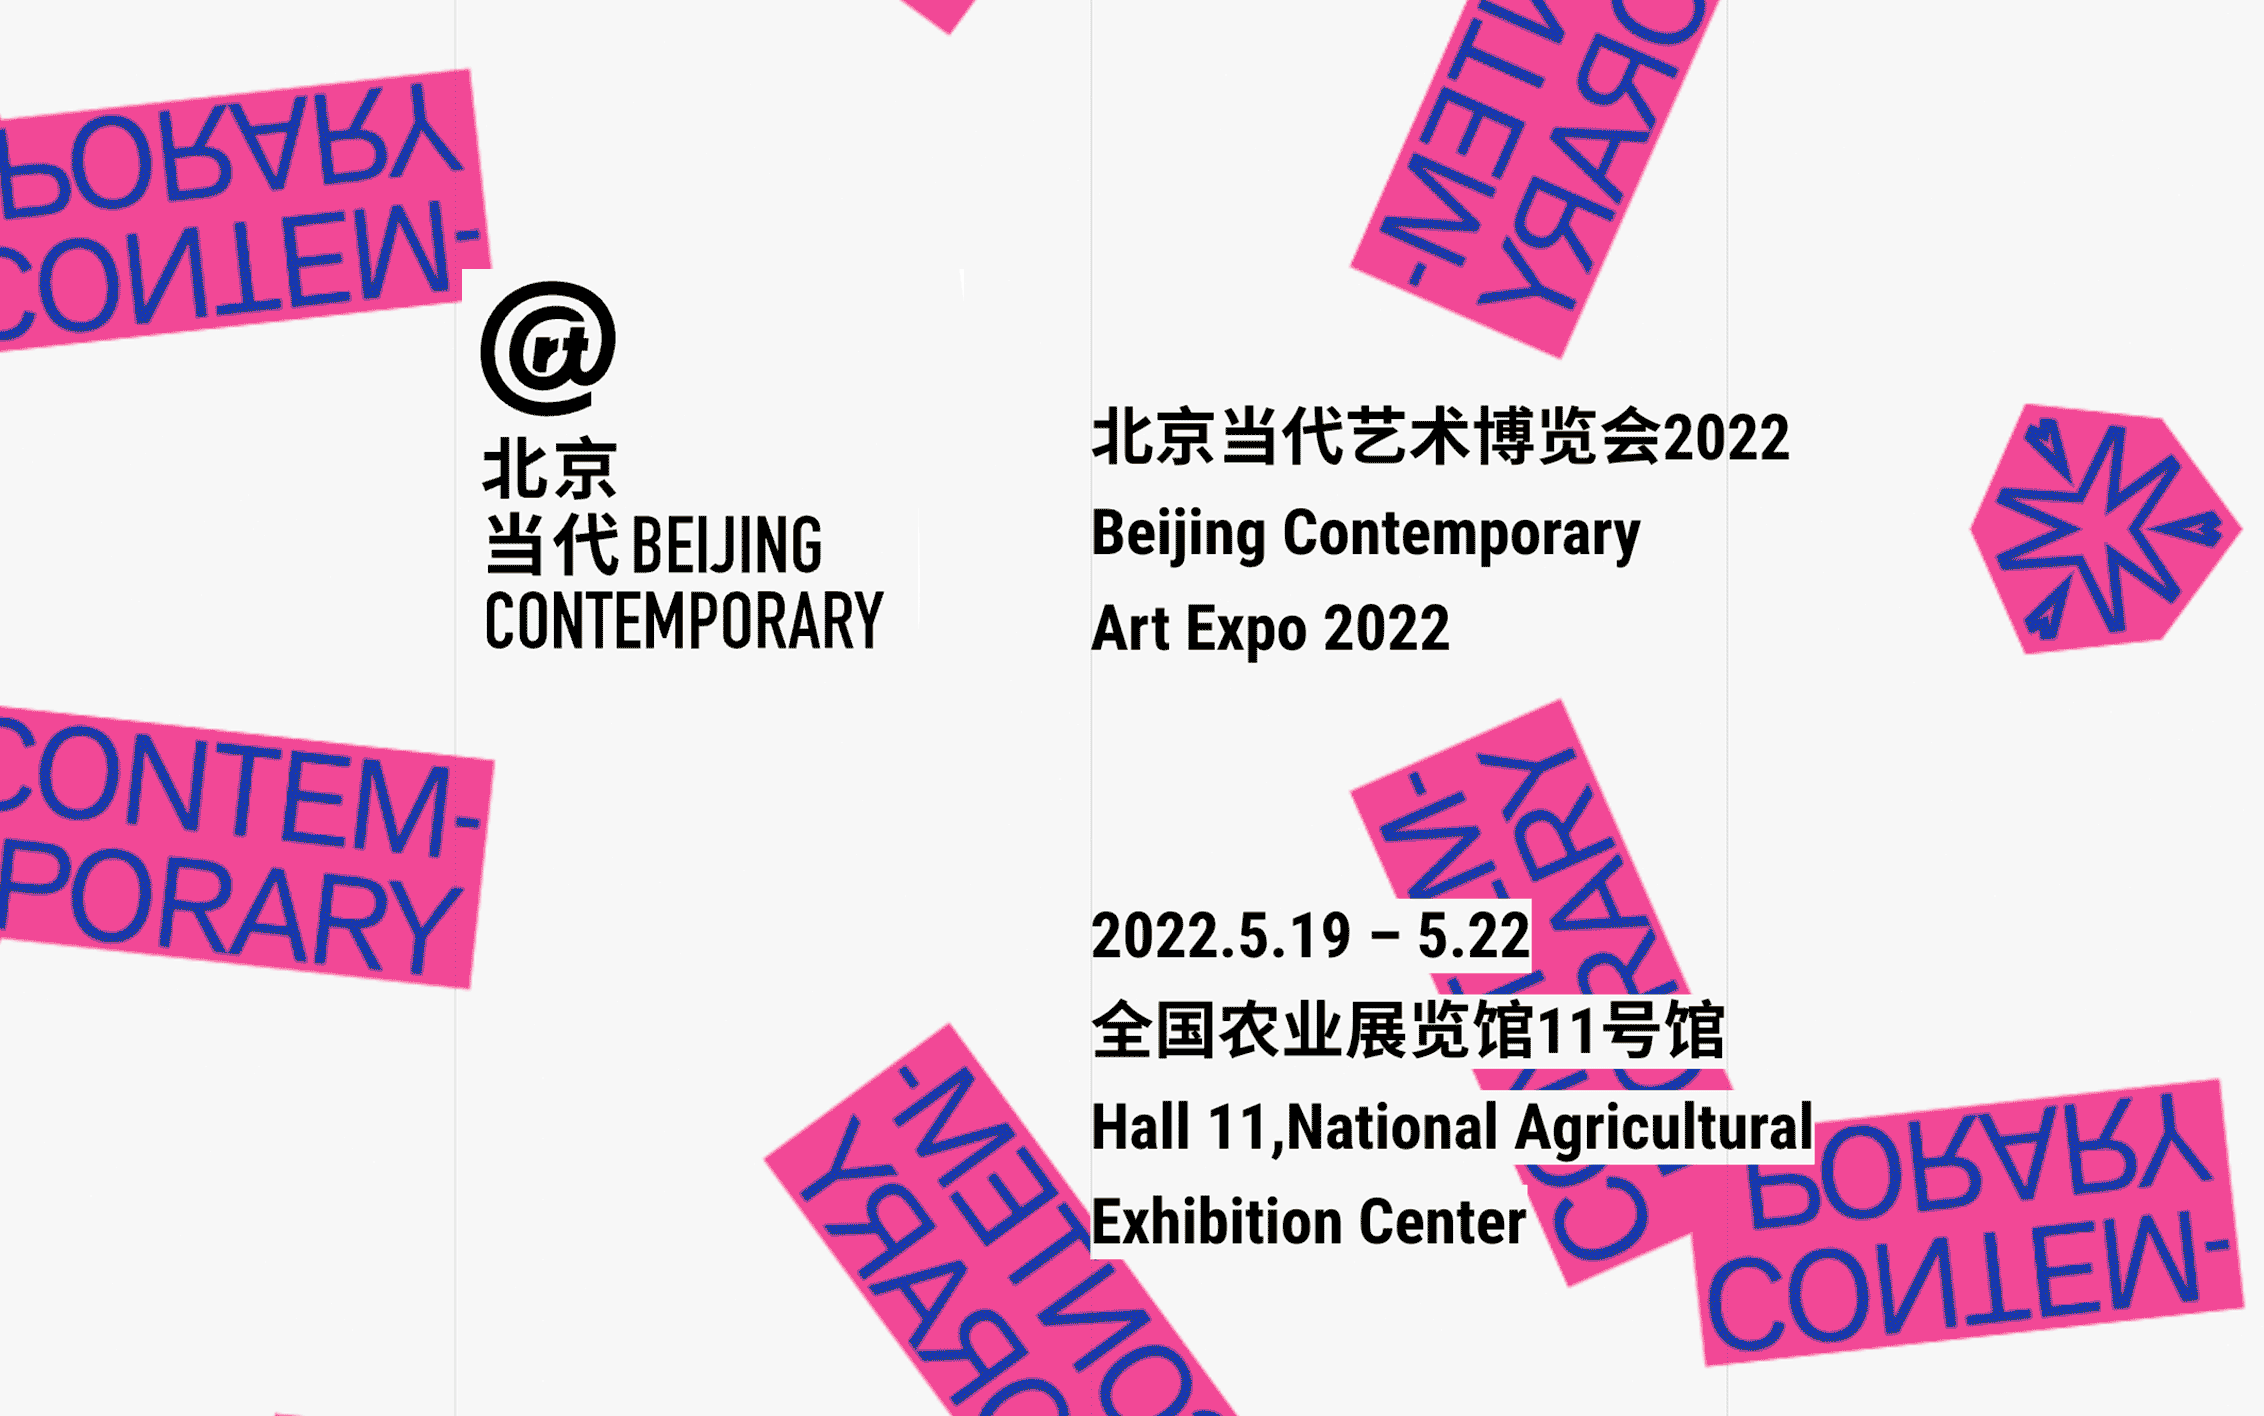 Contemporary art art fair, Beijing Contemporary Art Expo 2022 at Tang Contemporary Art, Beijing, China